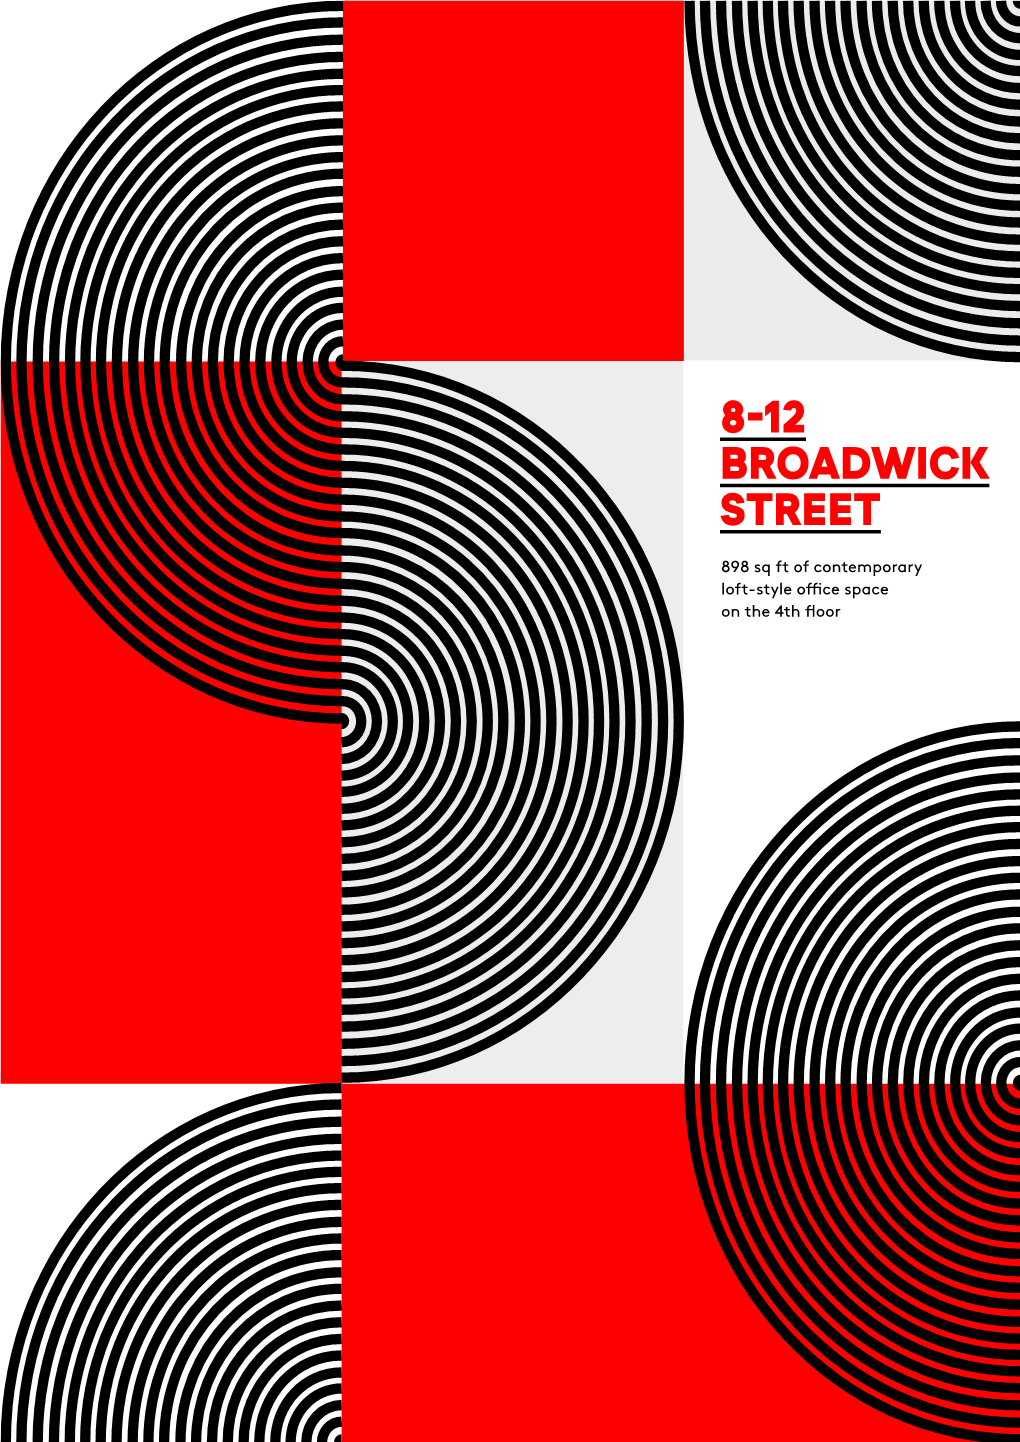 8-12 Broadwick Street